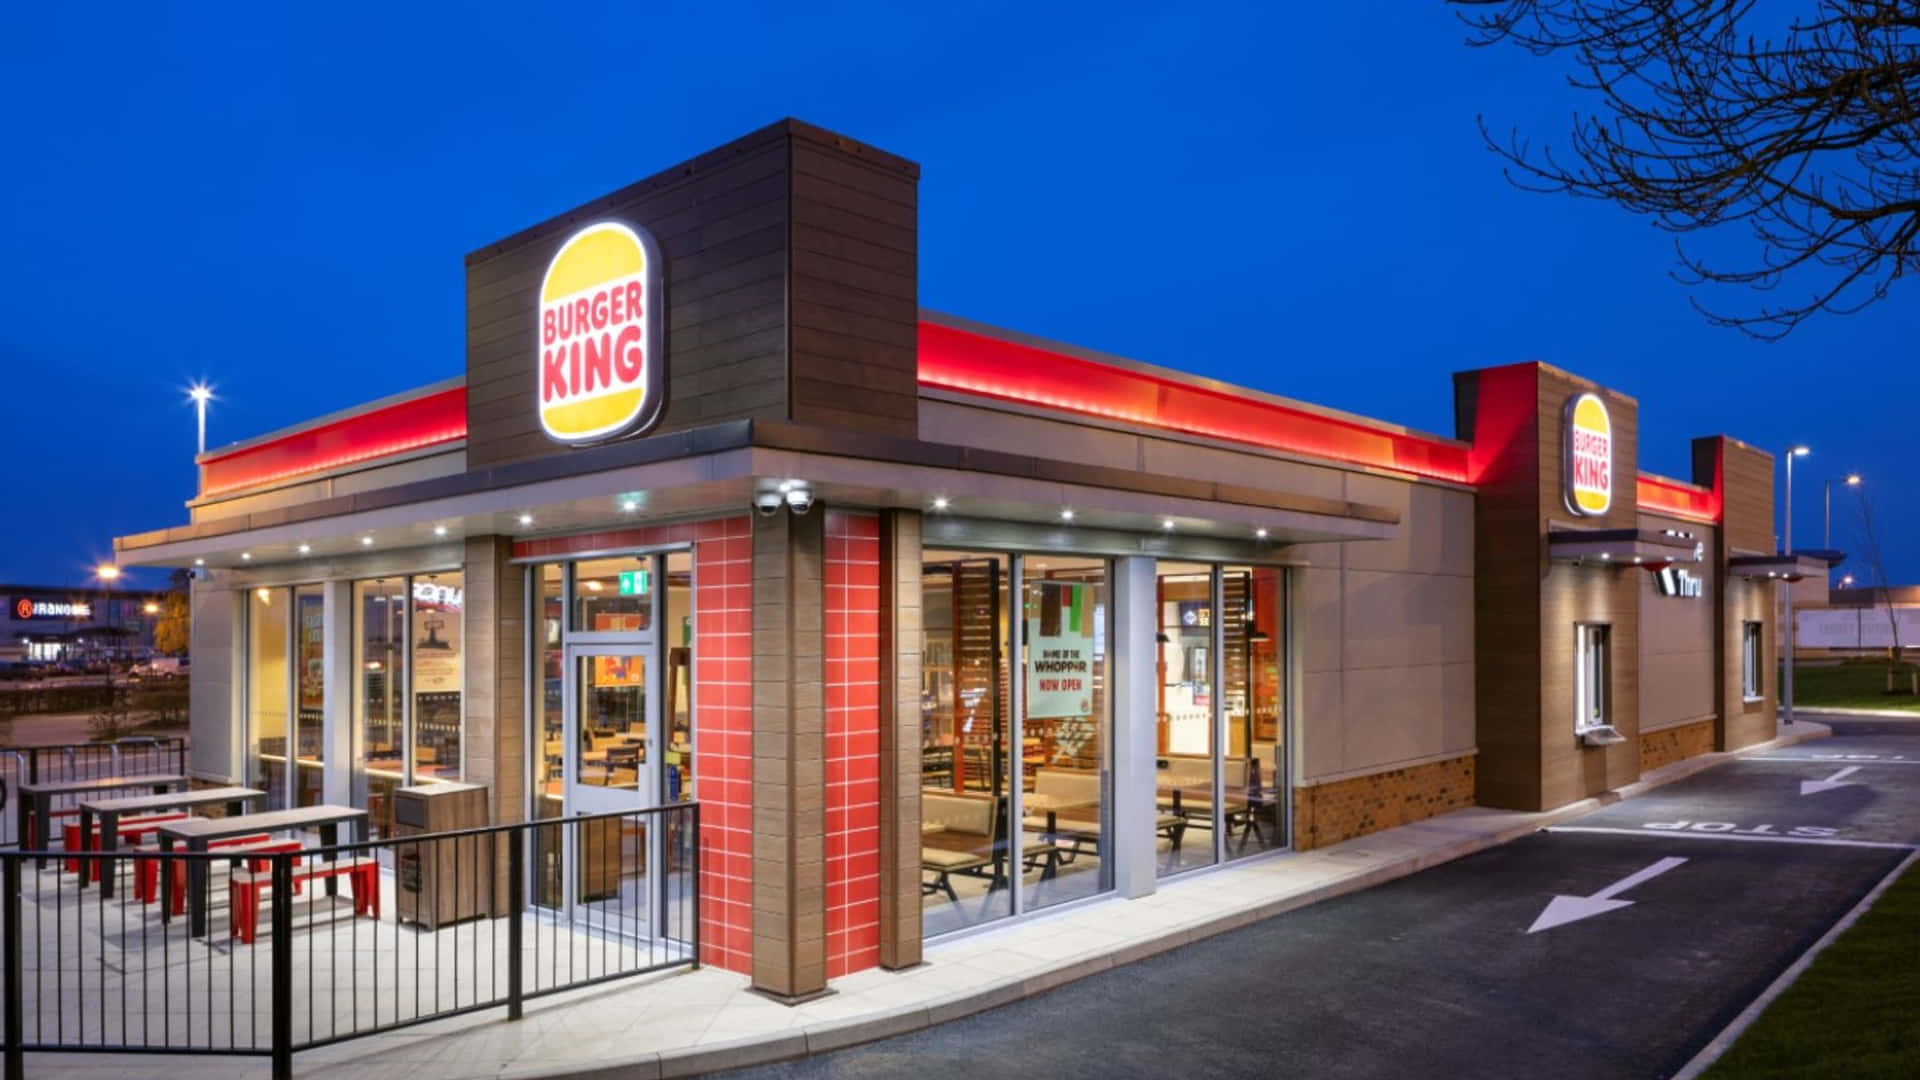 Satisfy your burger cravings in style with Burger King's Juicy Tendercrisp.